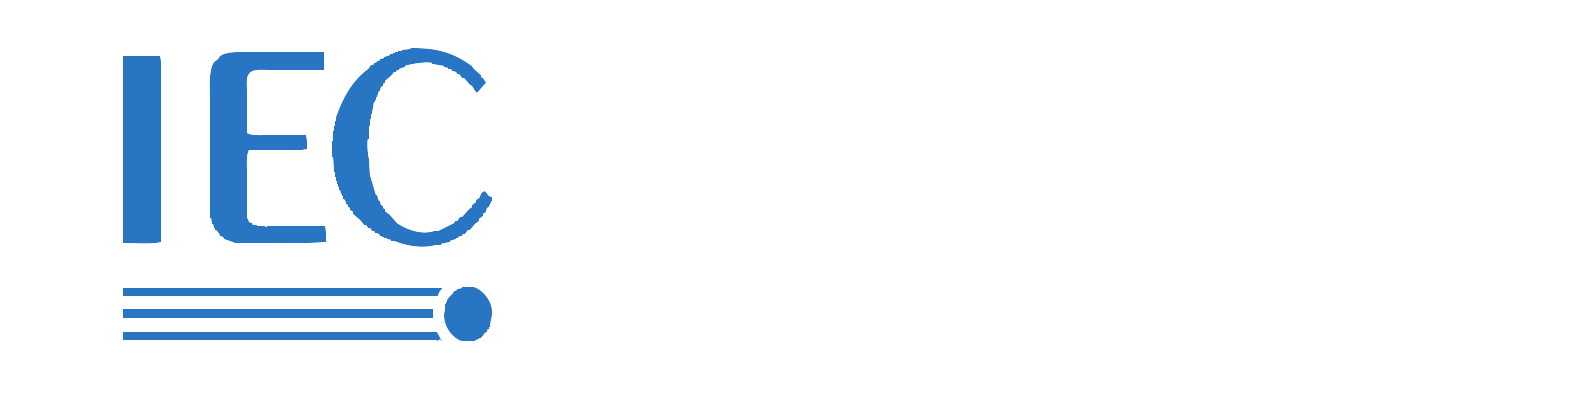 IEC 62196-2 EV Charge